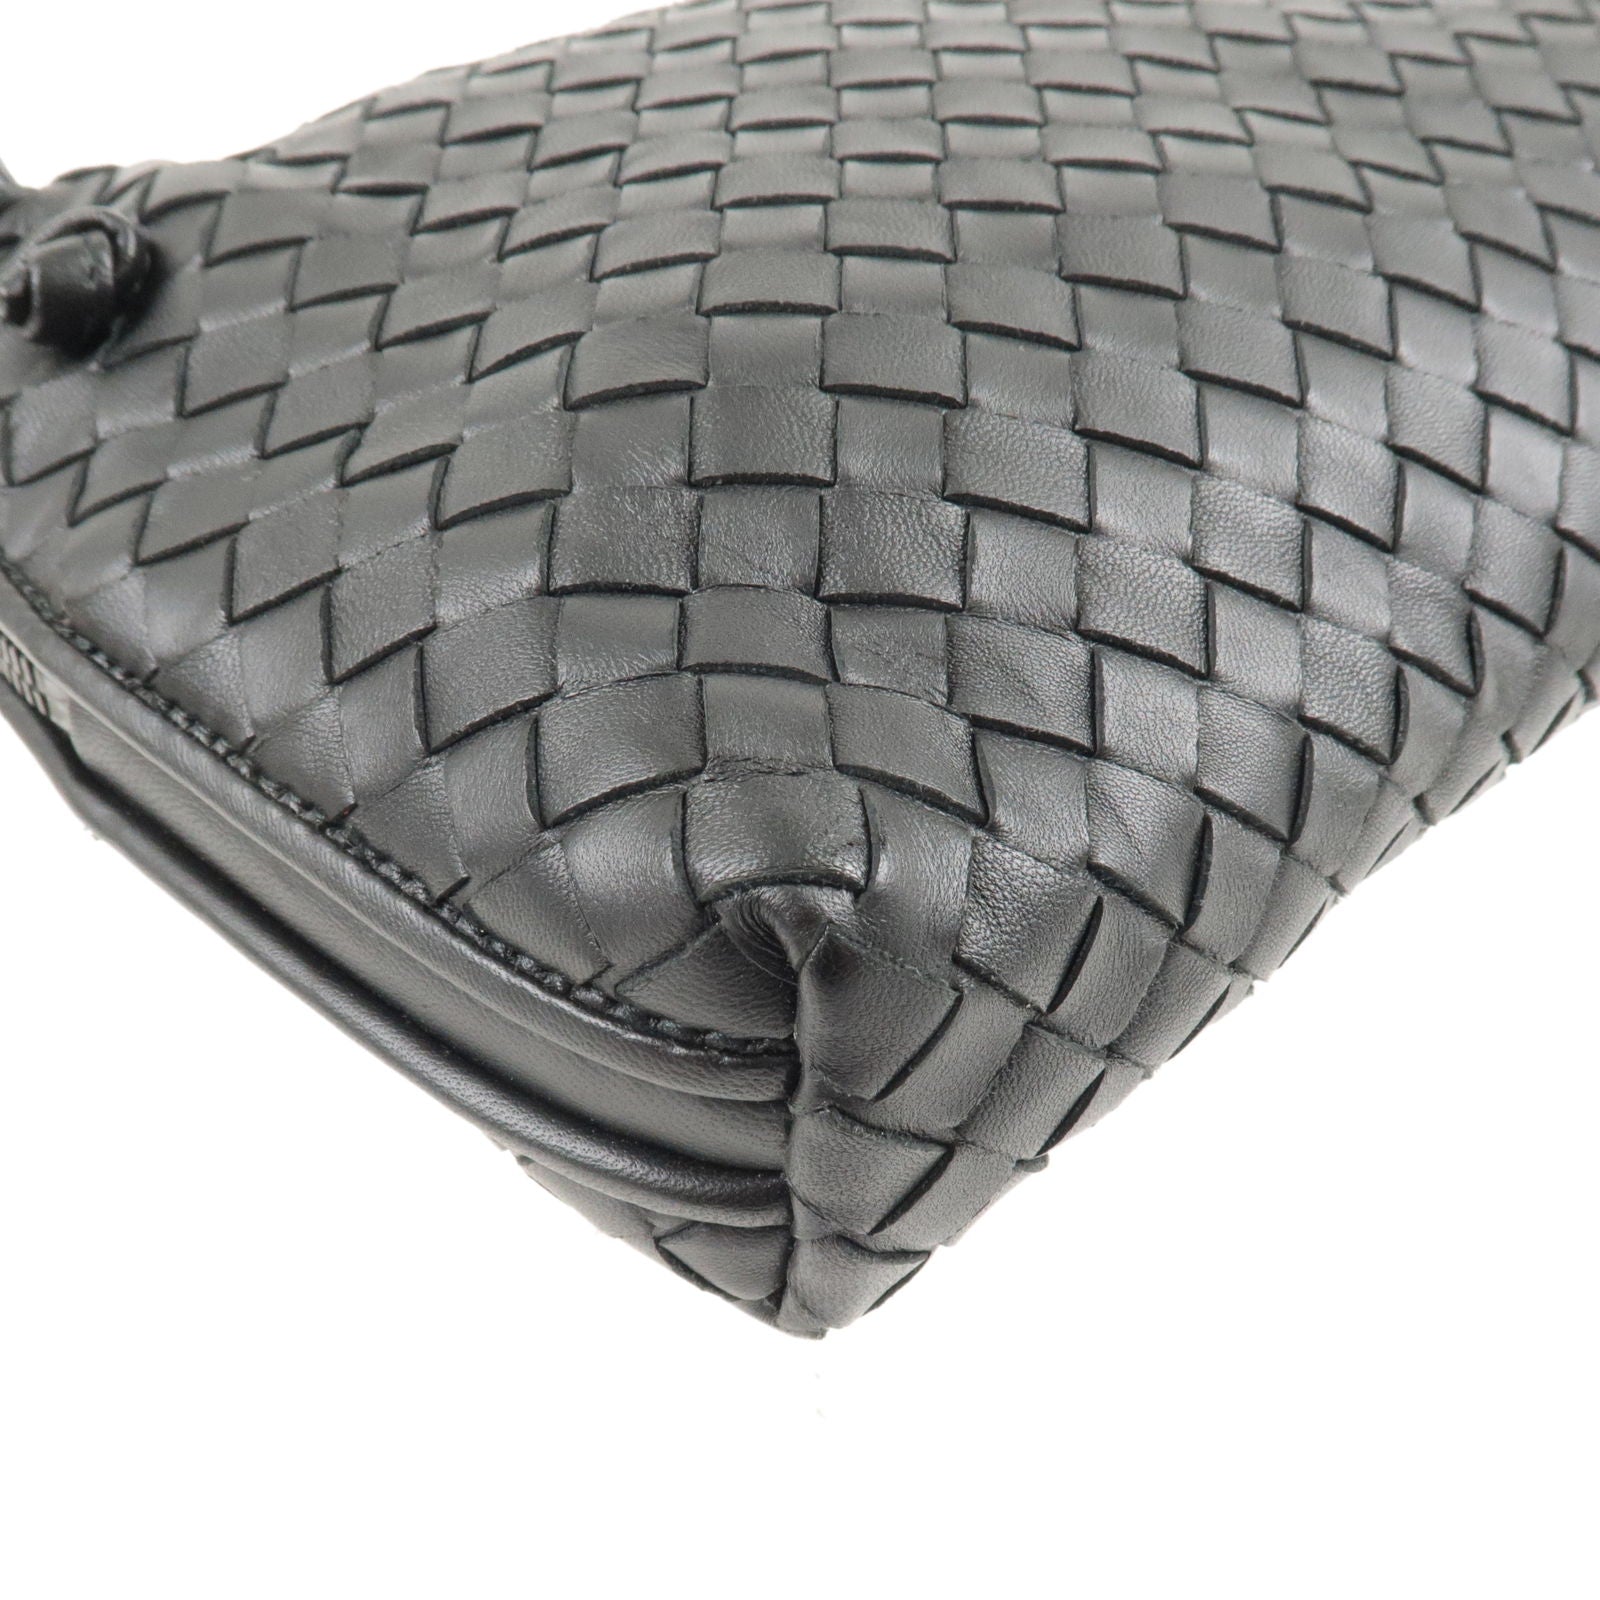 Bottega Veneta Beige Intrecciato Leather Nodini Crossbody Bag For